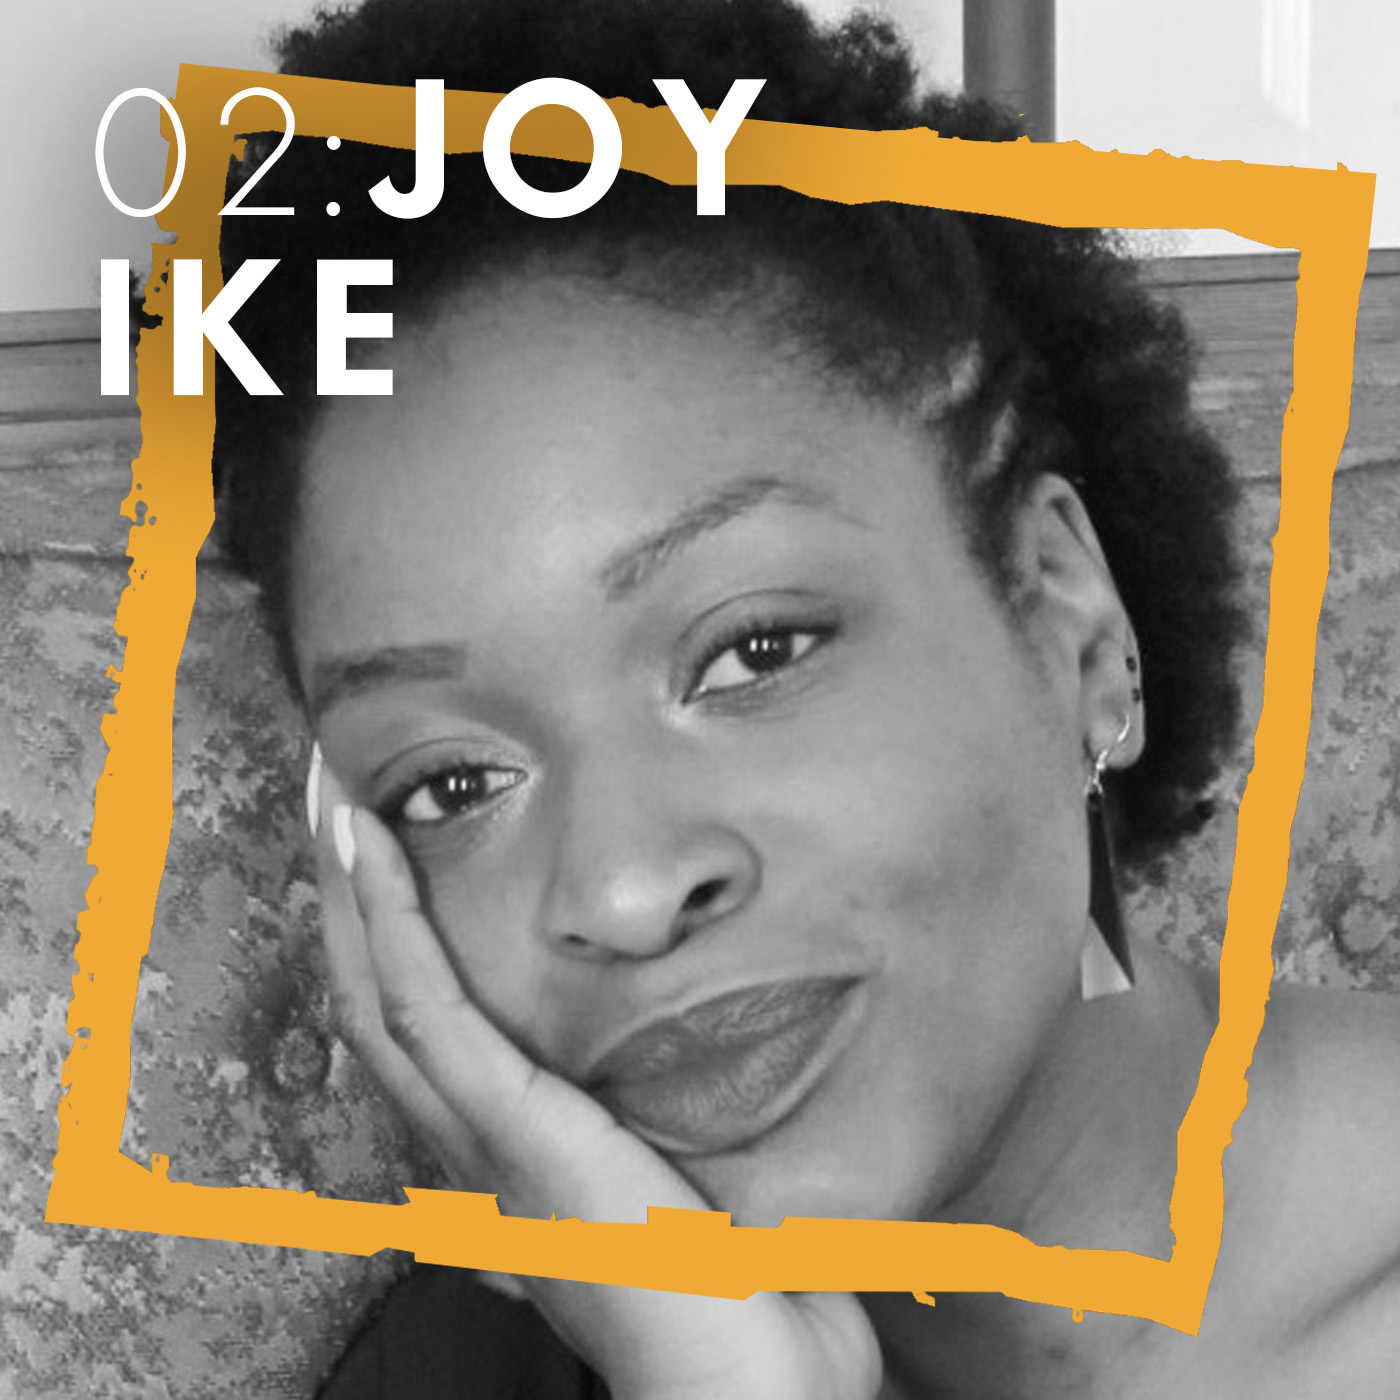 Episode 02: Joy Ike